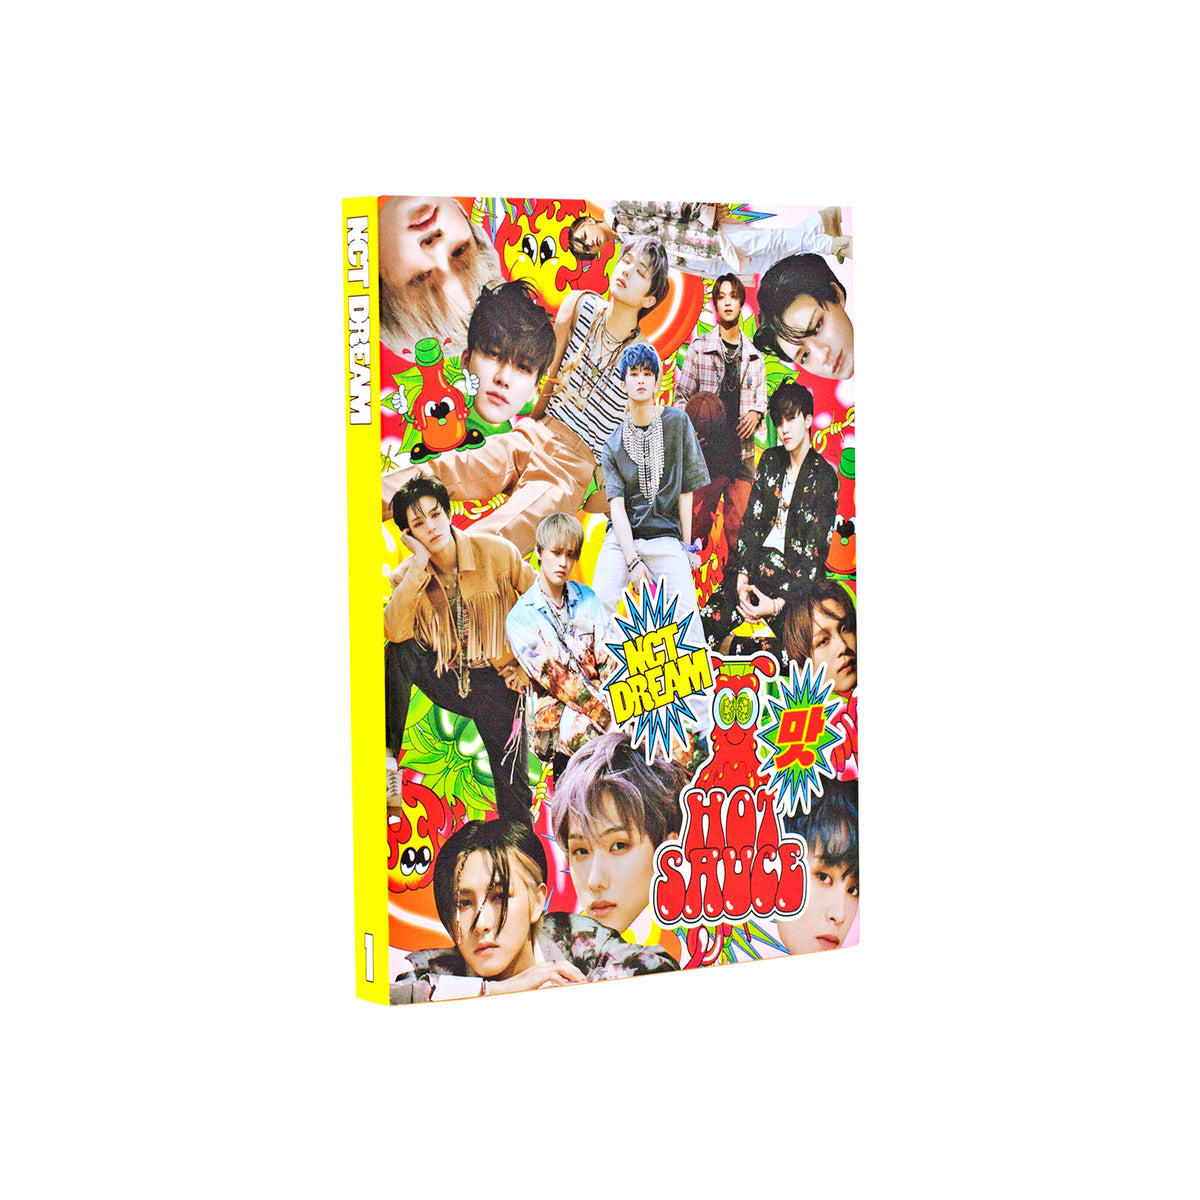 NCT DREAM Hot Sauce 1st Album - Photobook Version - Chilling Ver product image